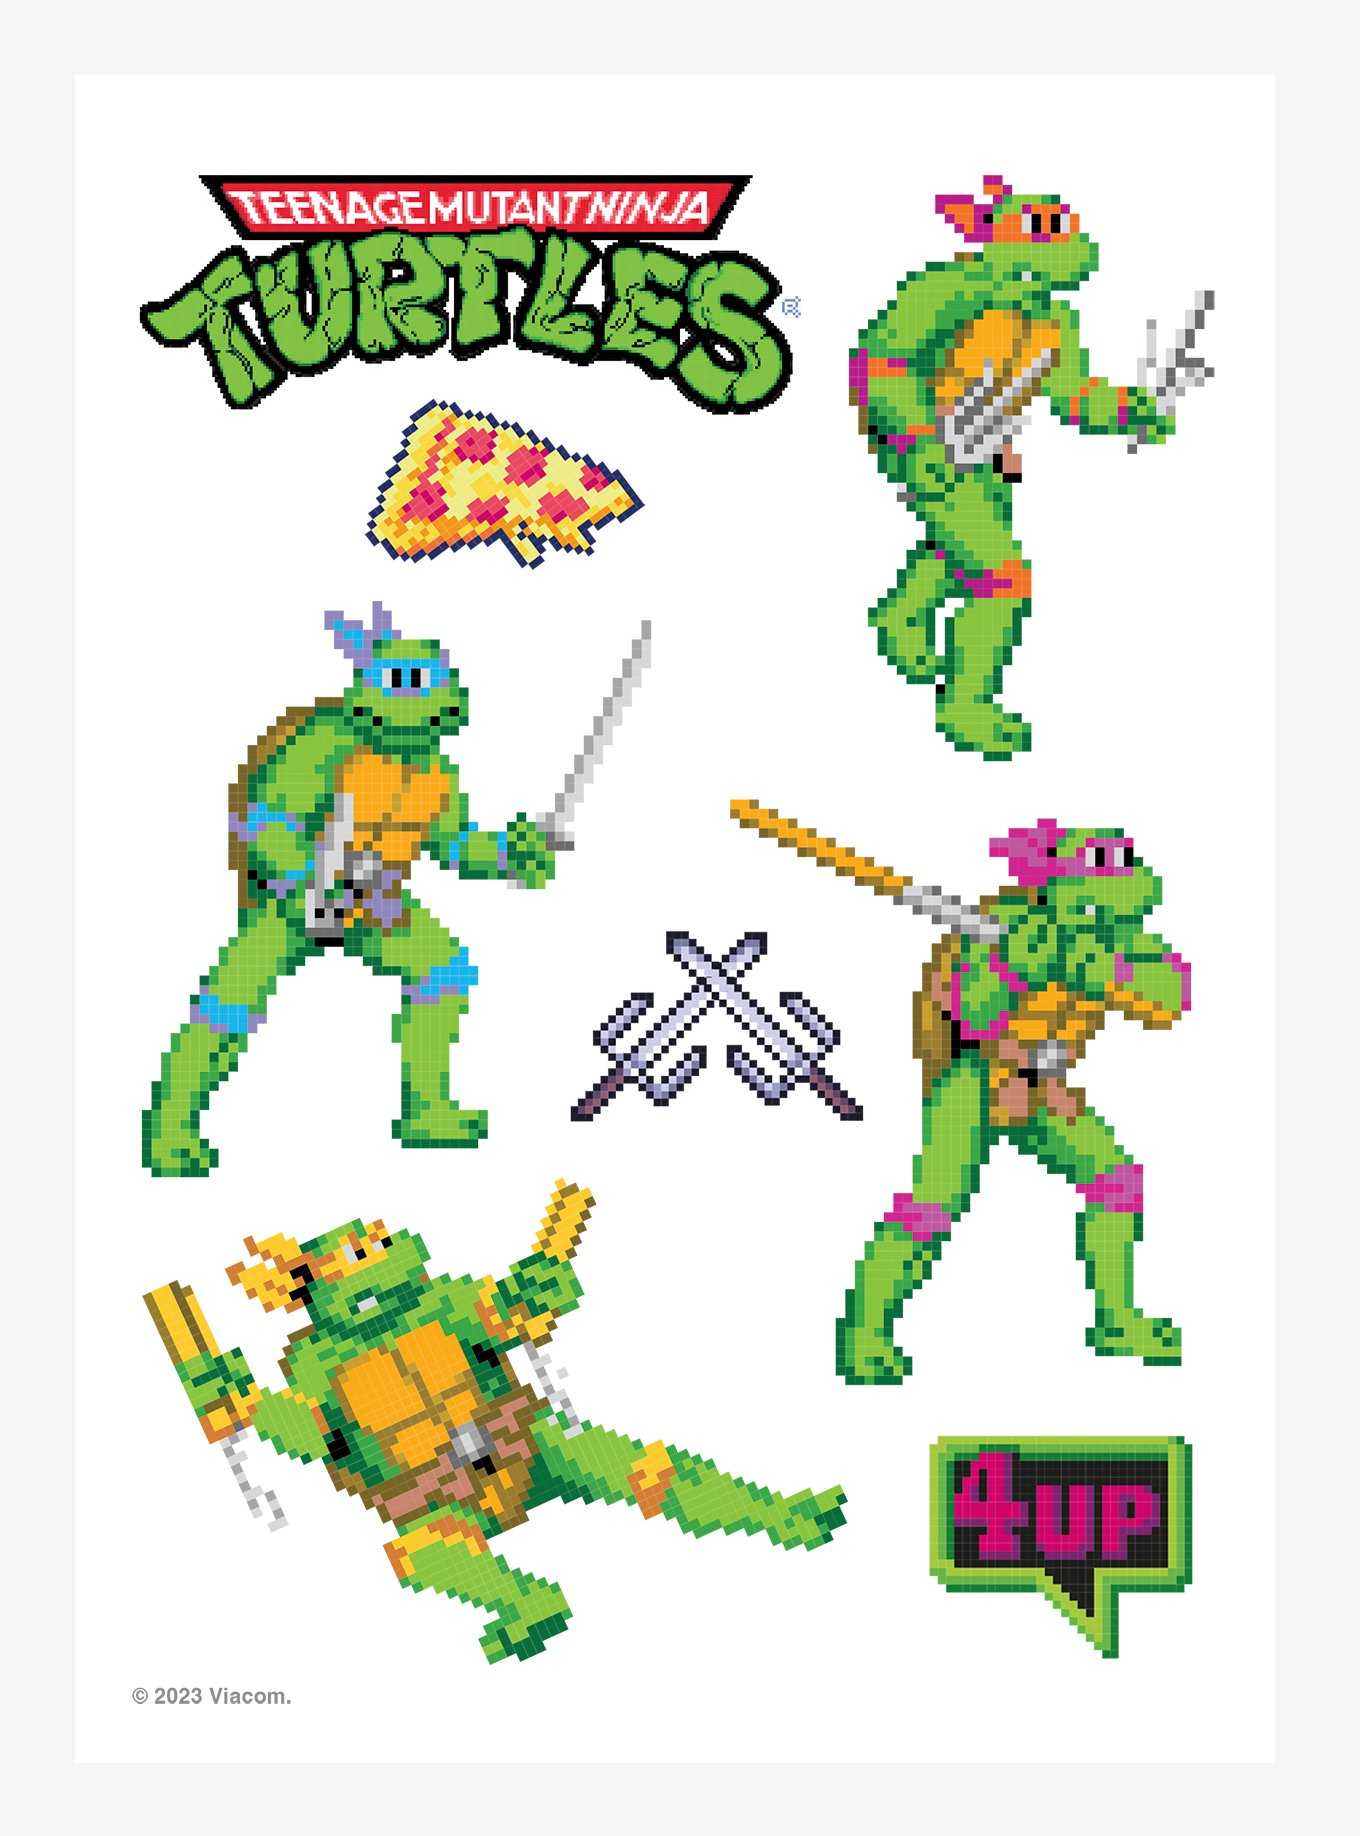 Teenage Mutant Ninja Turtles Turtle-Style Pizza Kiss-Cut Sticker Sheet, , hi-res